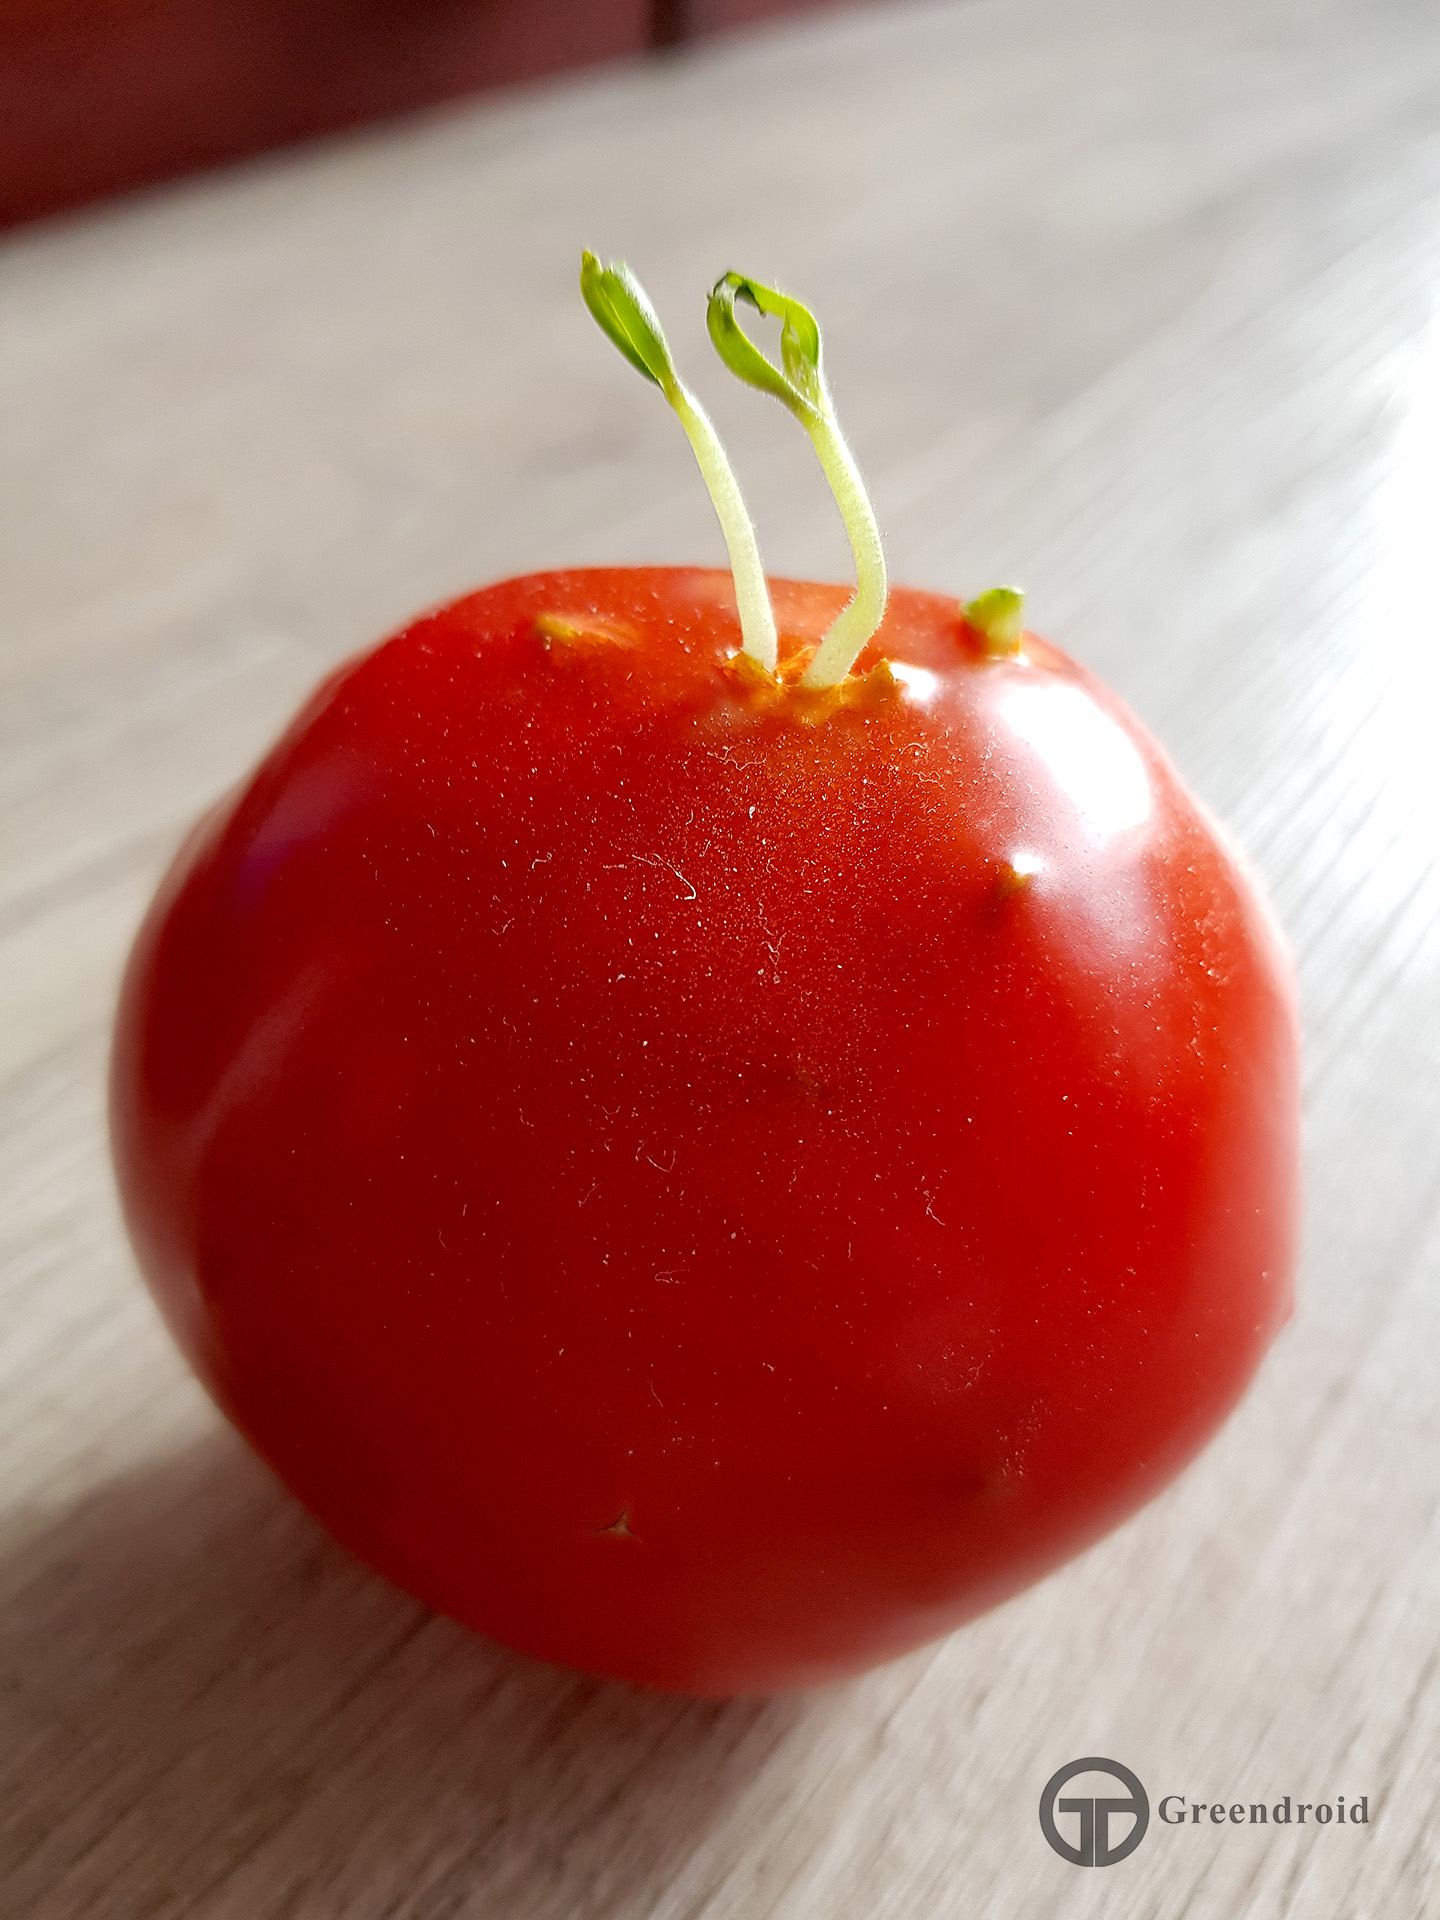 Keimende Tomate